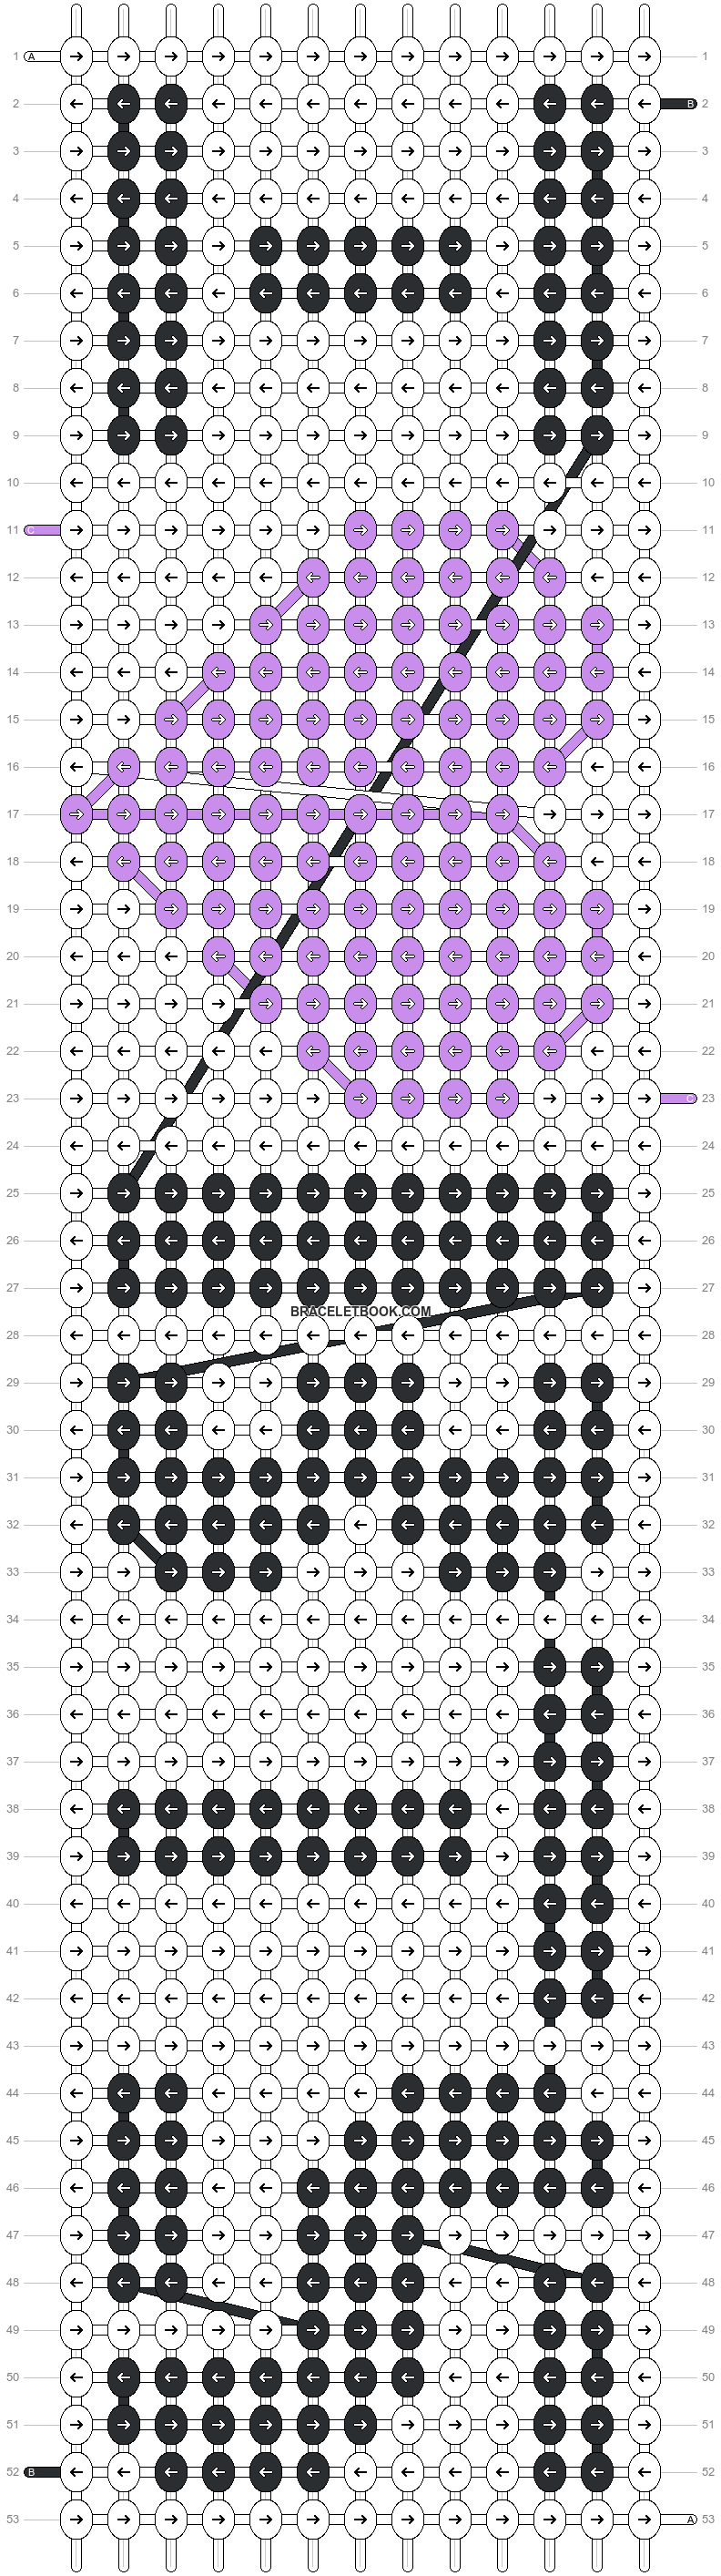 Alpha pattern #18455 variation #130398 pattern